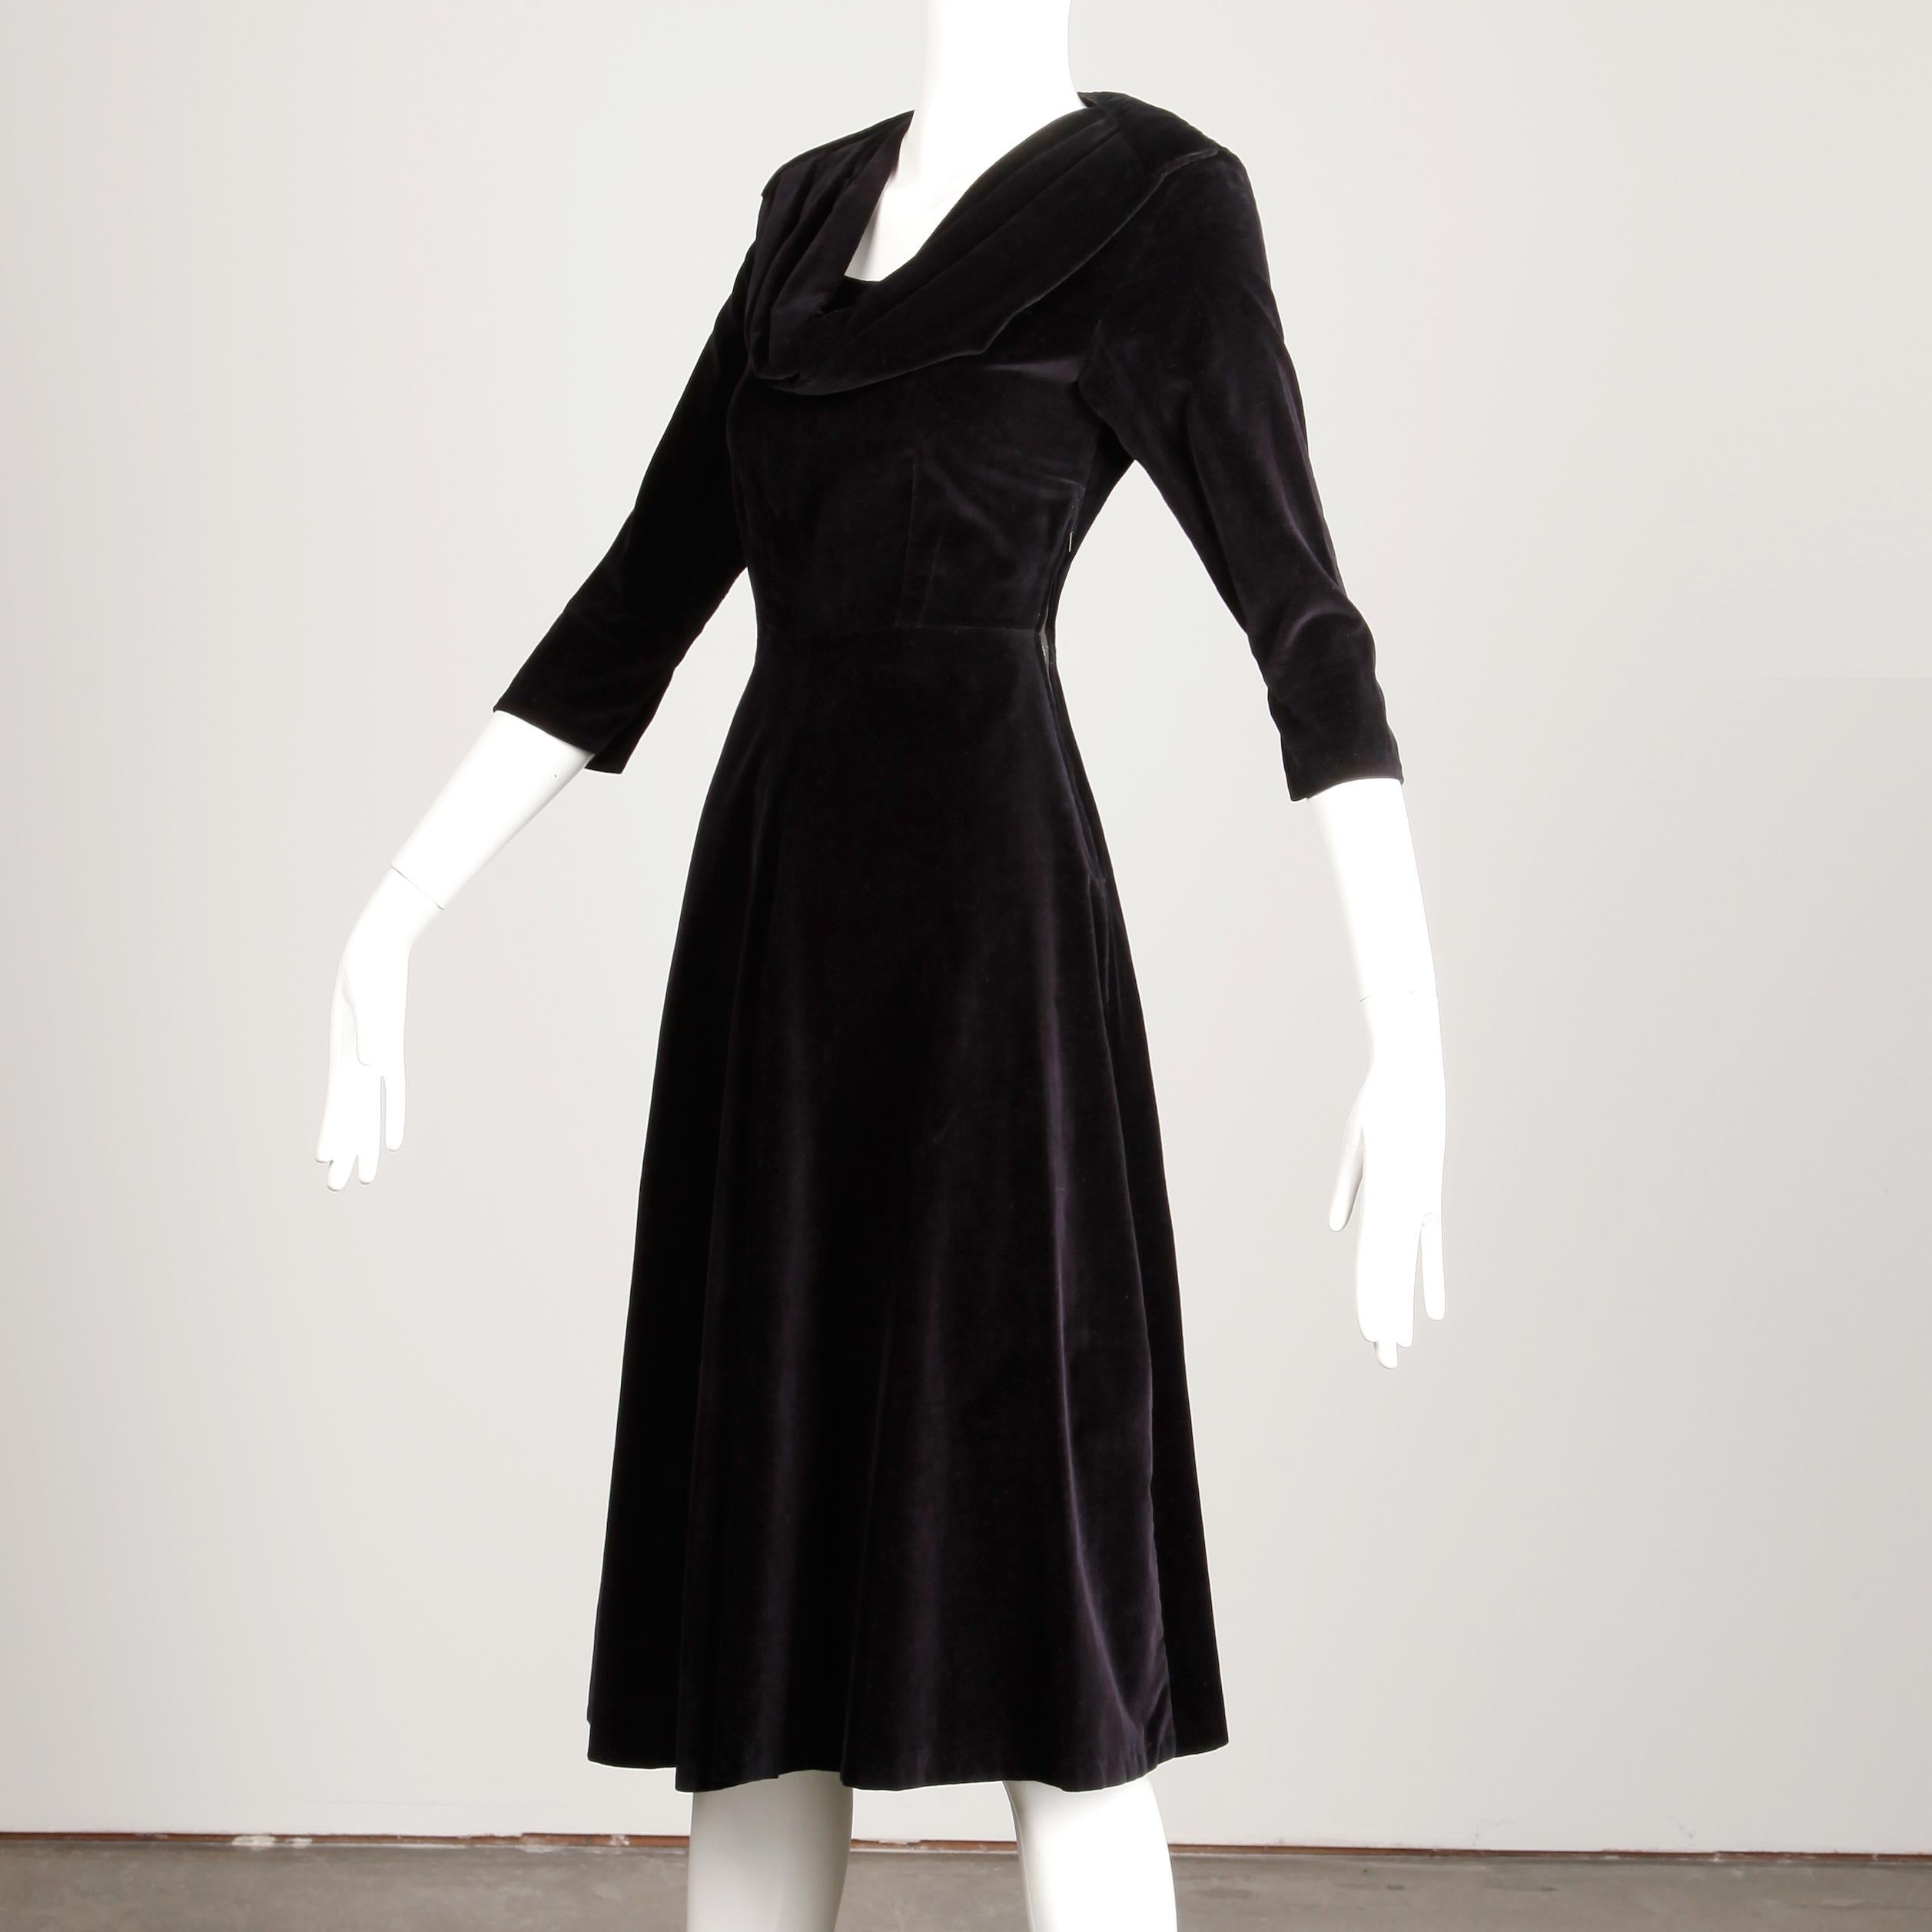 1940s black dress